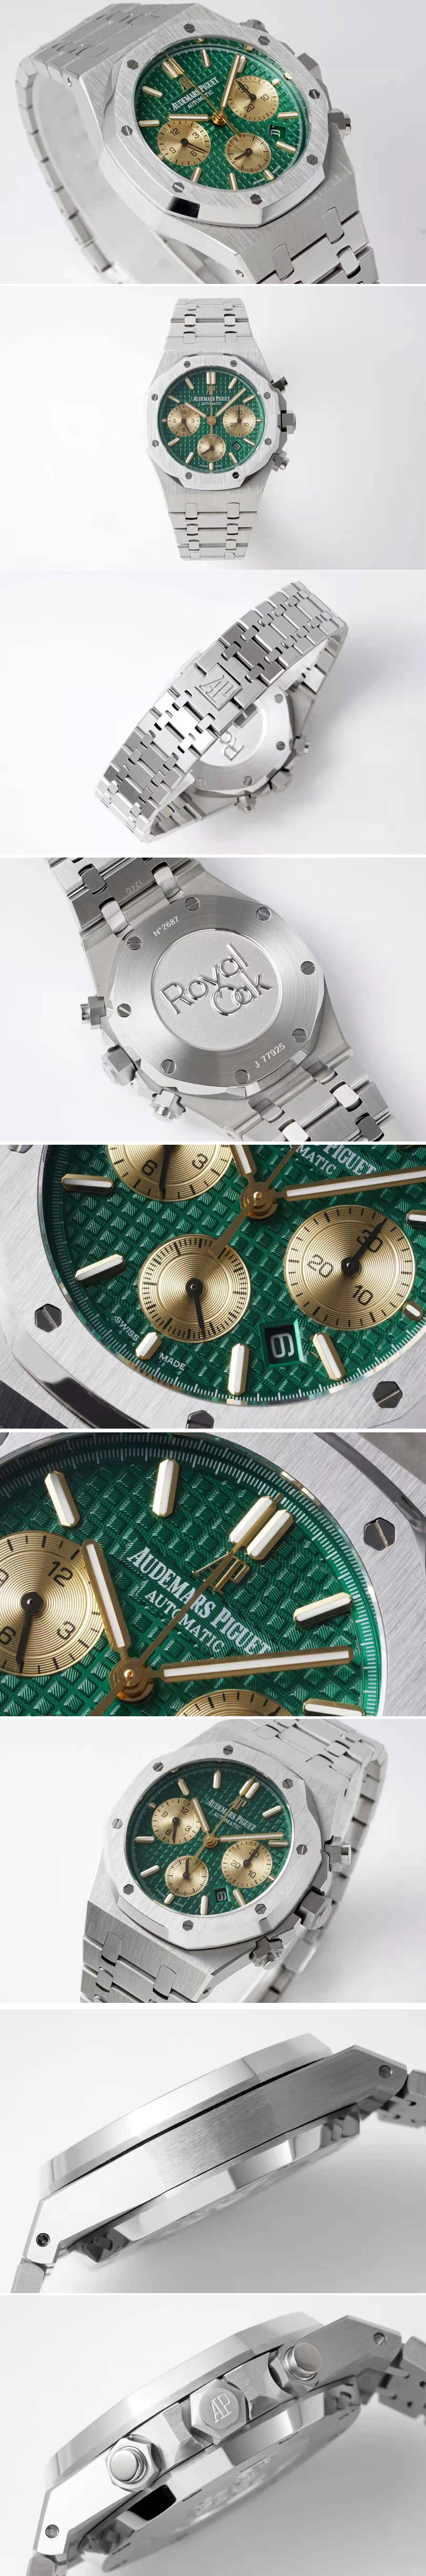 Replica Audemars Piguet Royal Oak Chrono 26331ST SS OMF 1:1 Best Edition Green Dial on SS Bracelet A7750